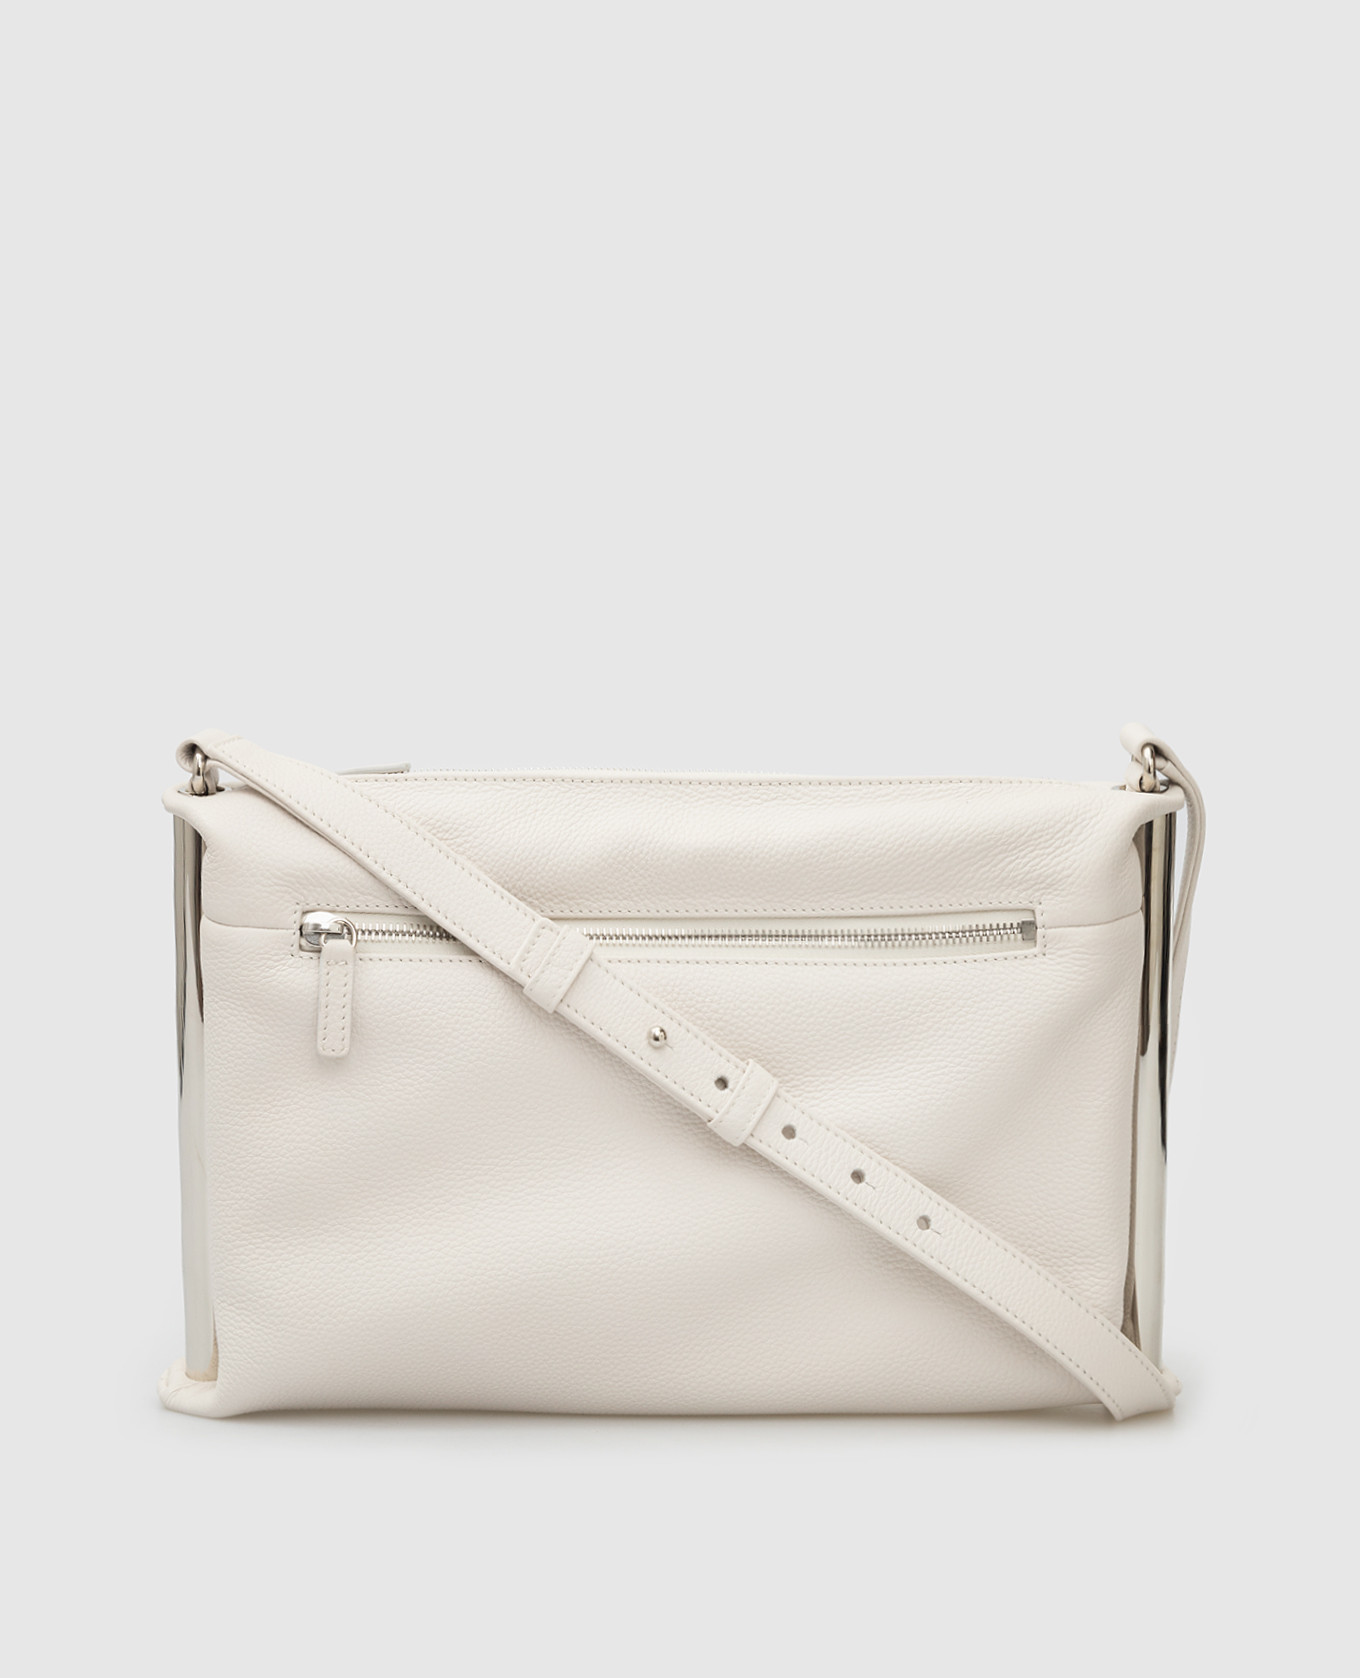 Adele white leather bag